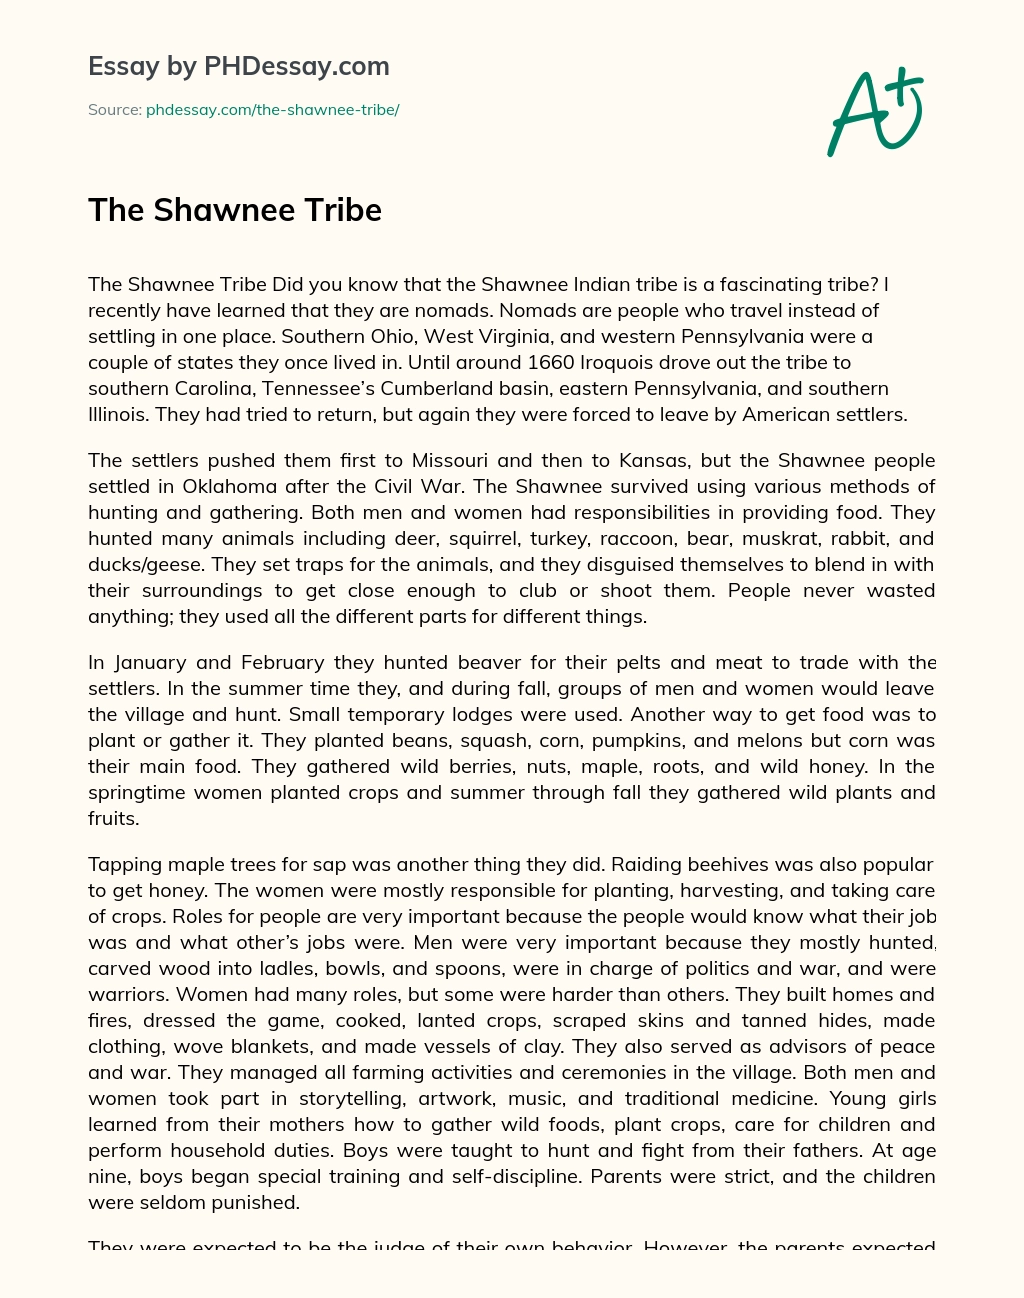 The Shawnee Tribe essay